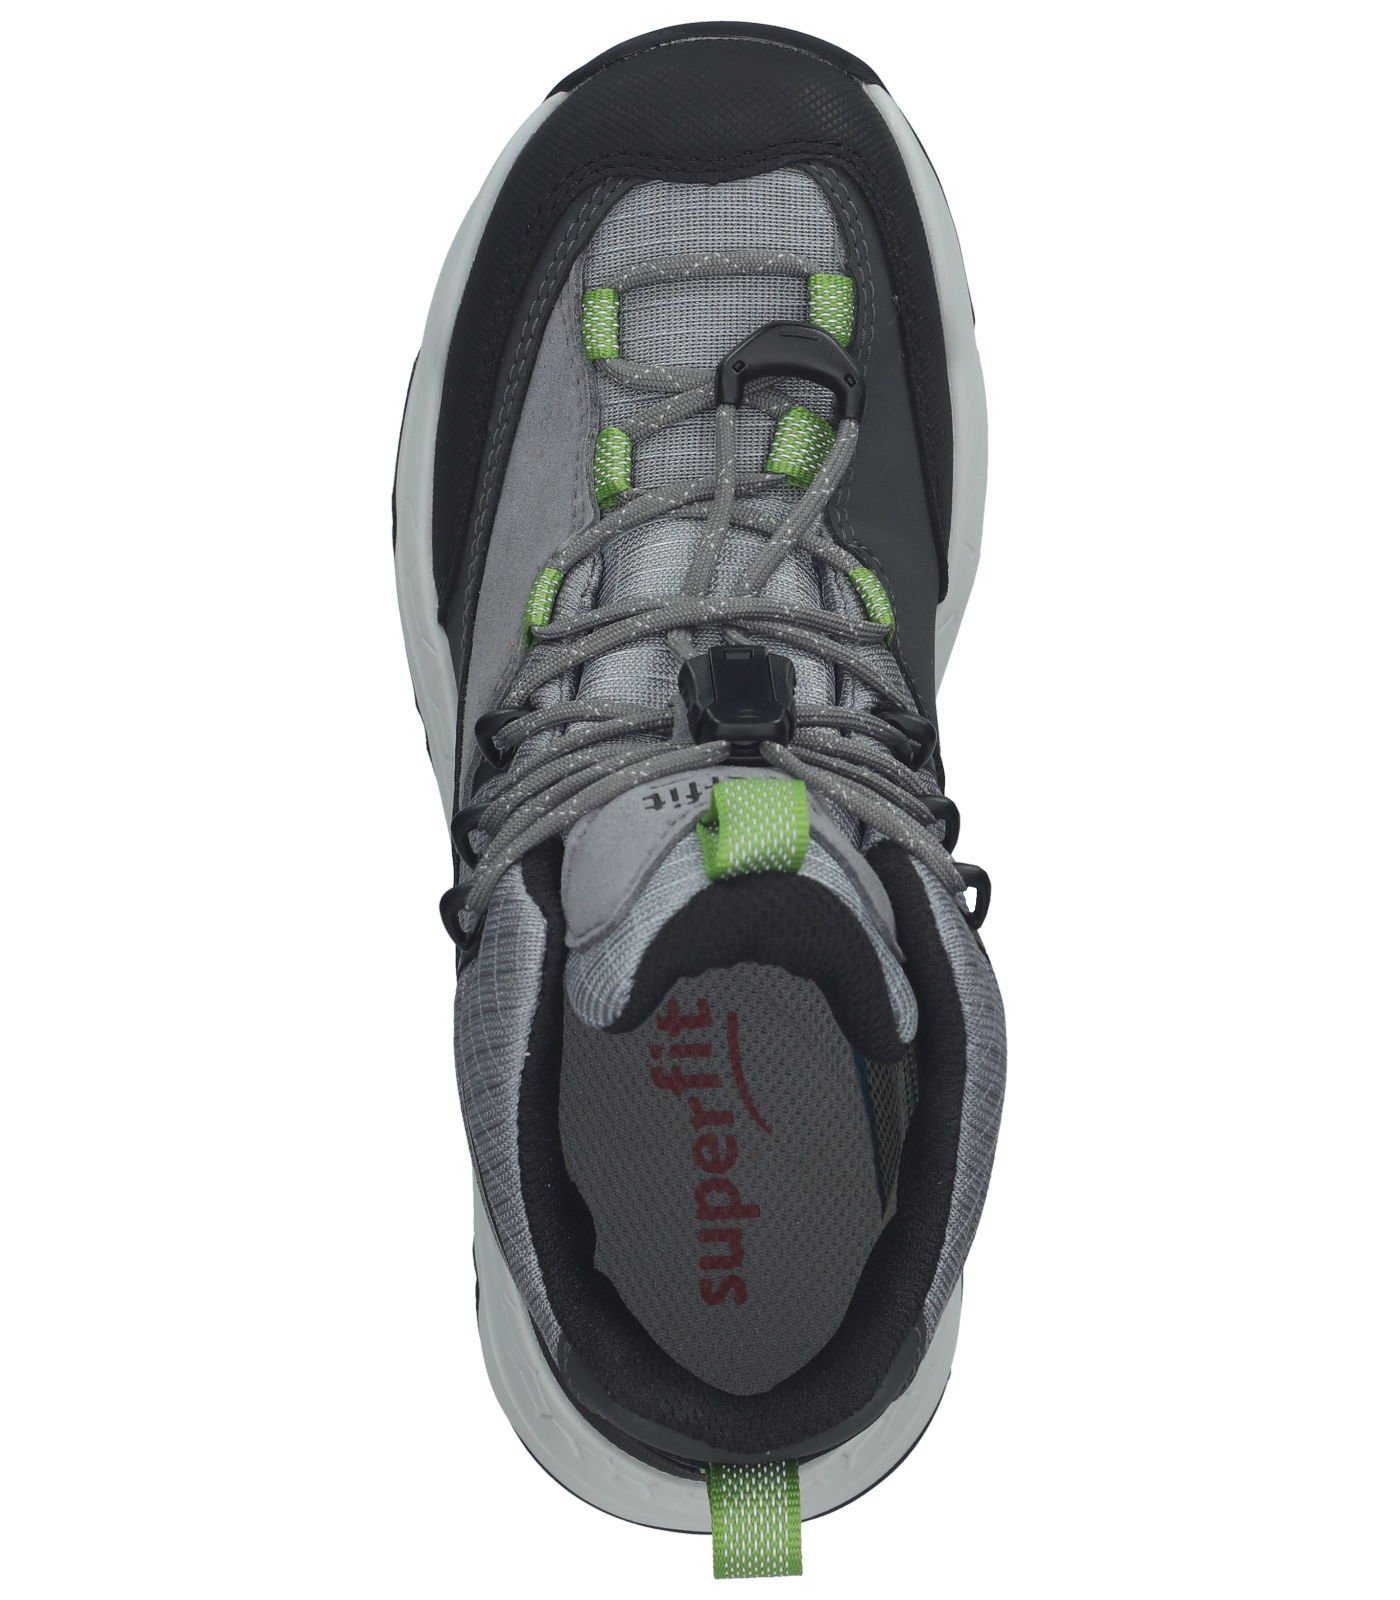 Lederimitat/Textil Grün Superfit Sneaker Grau Sneaker